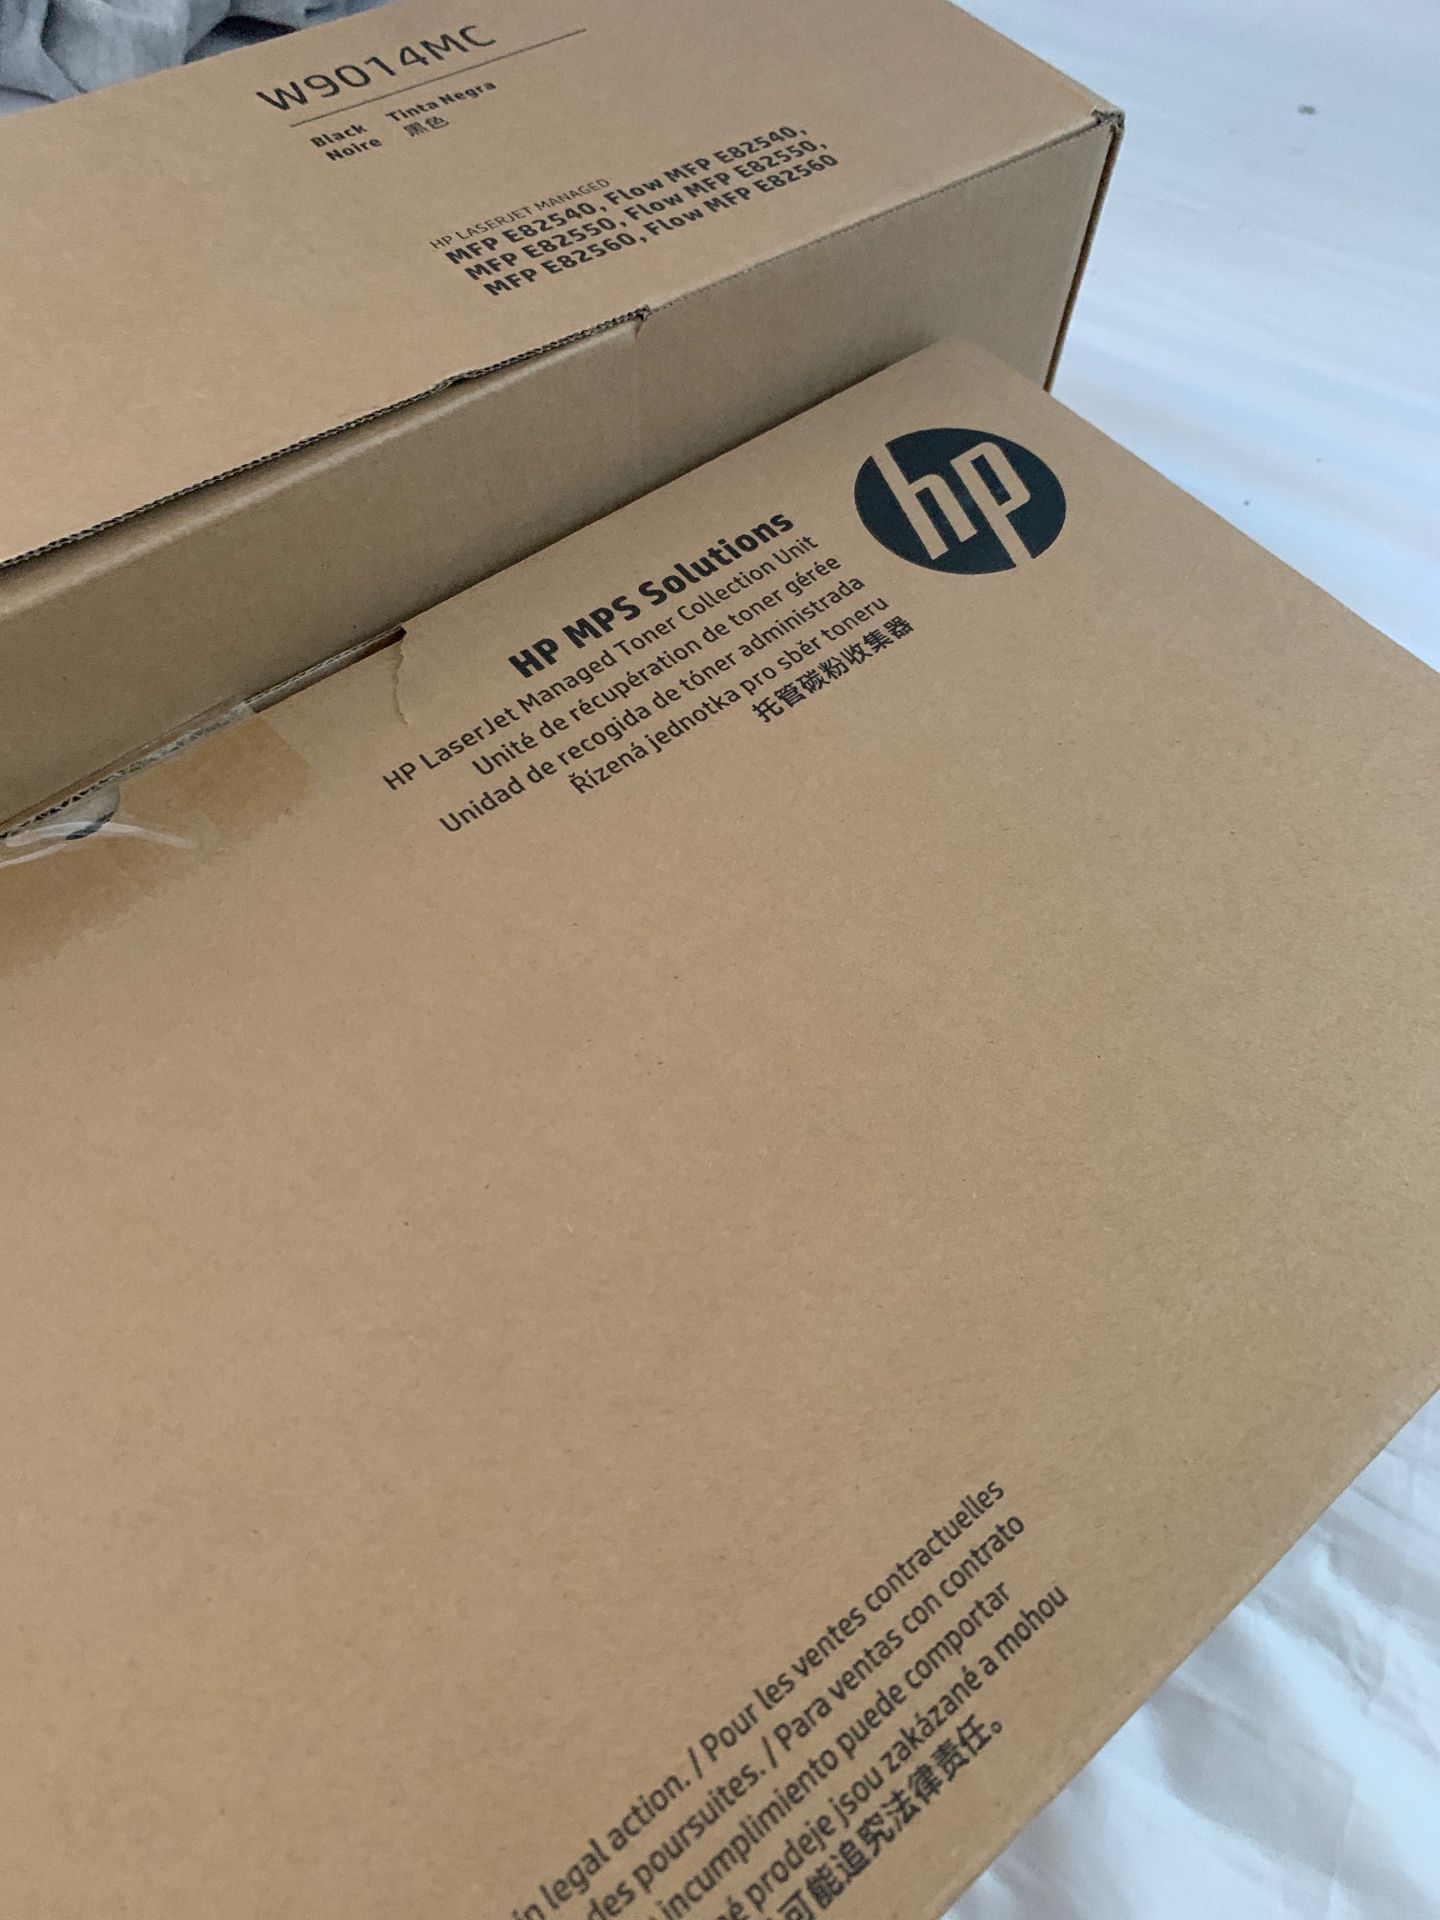 Both HP Laserjet Managed toner collection unit and managed printer cartridge